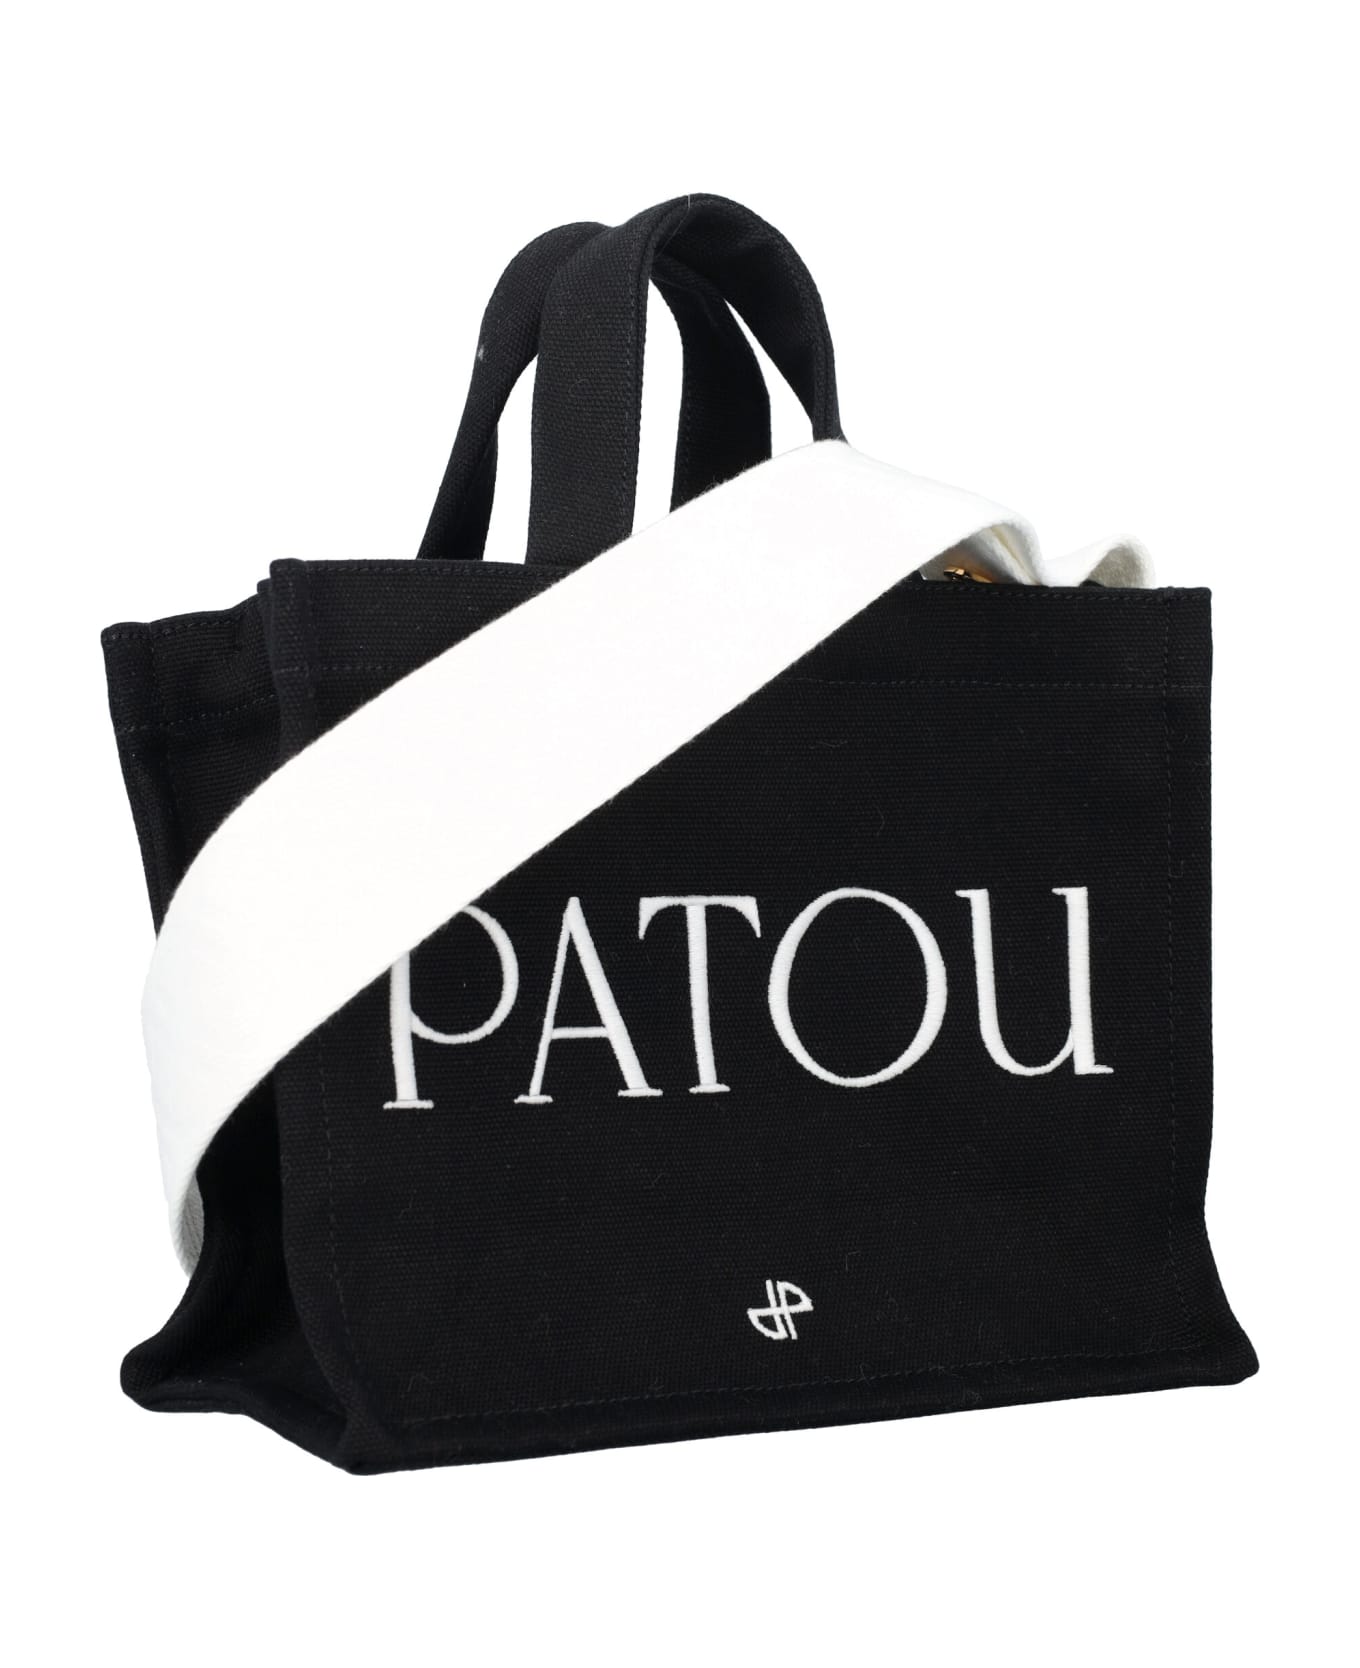 Patou Small Canvas Tote Bag - BLACK